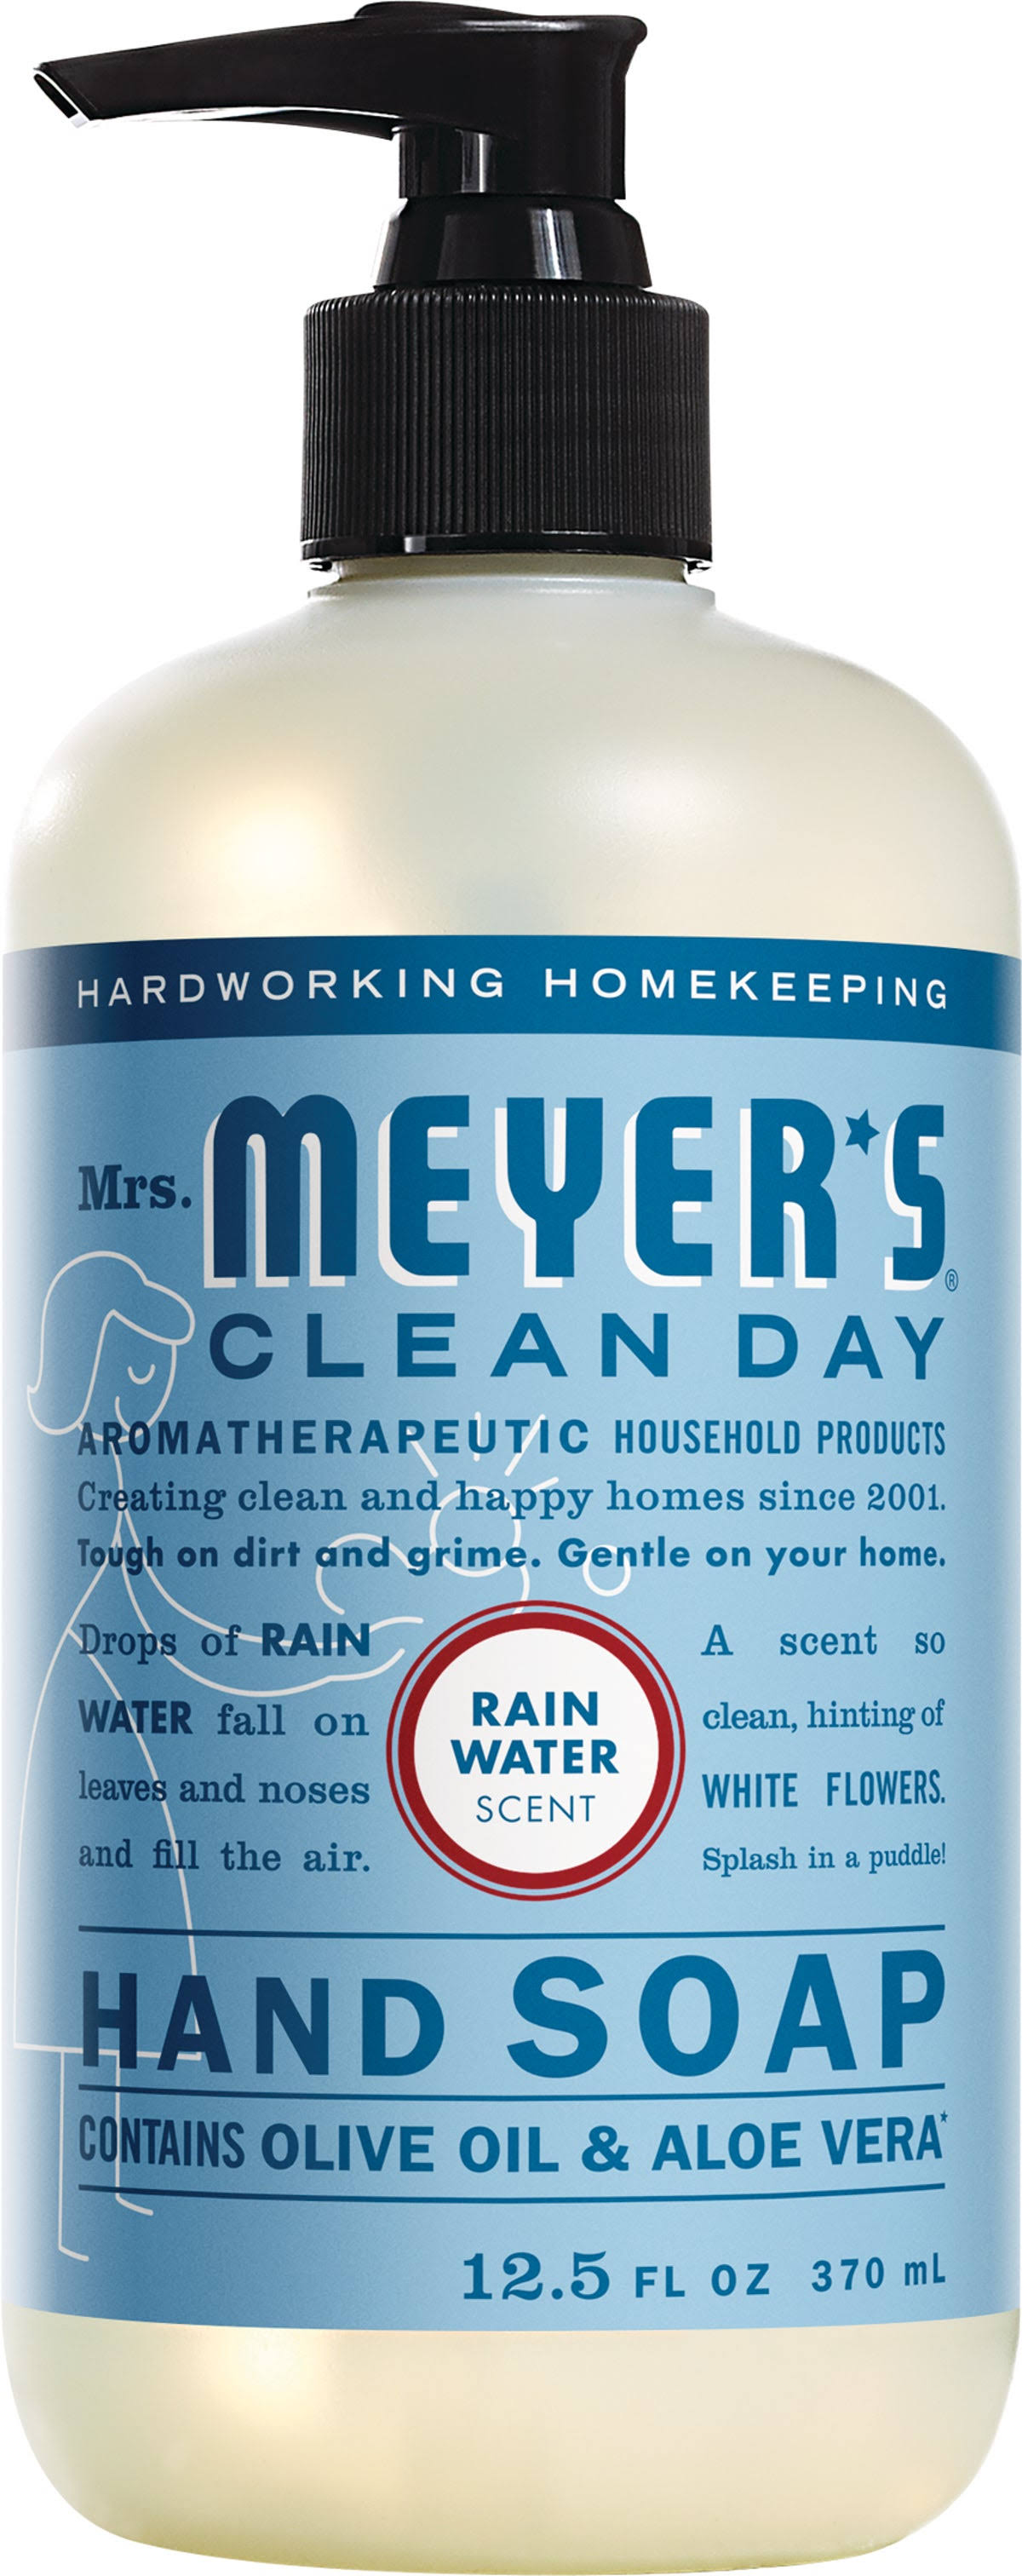 Mrs. Meyers Clean Day Liquid Hand Soap - Rain Water - 12.5 FL oz (370 ml)